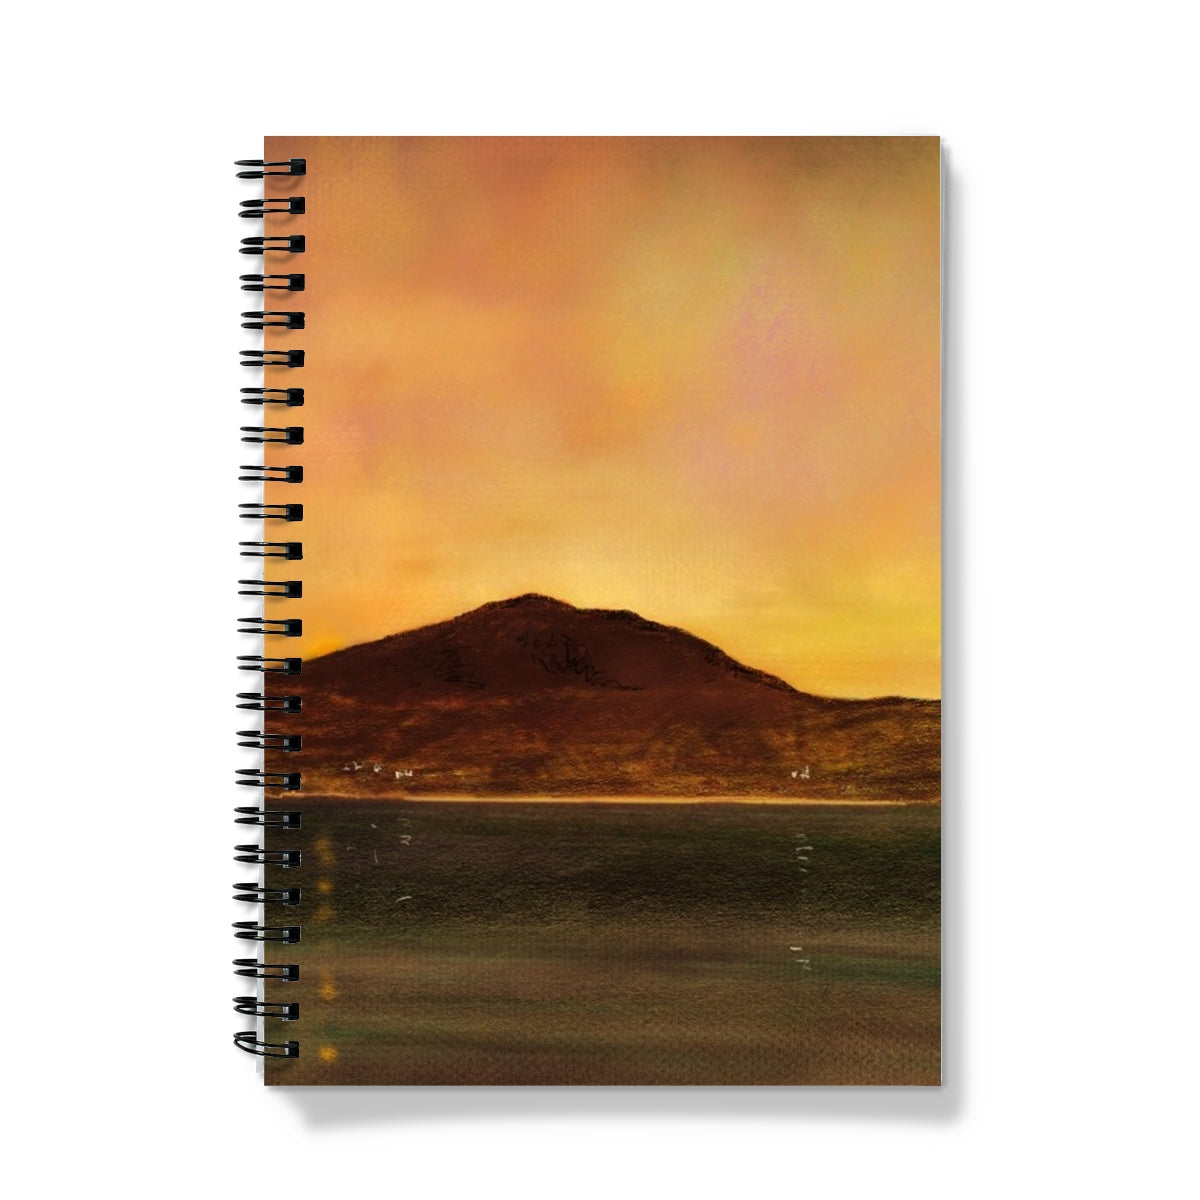 Eriskay Dusk Art Gifts Notebook-Journals & Notebooks-Hebridean Islands Art Gallery-A4-Lined-Paintings, Prints, Homeware, Art Gifts From Scotland By Scottish Artist Kevin Hunter